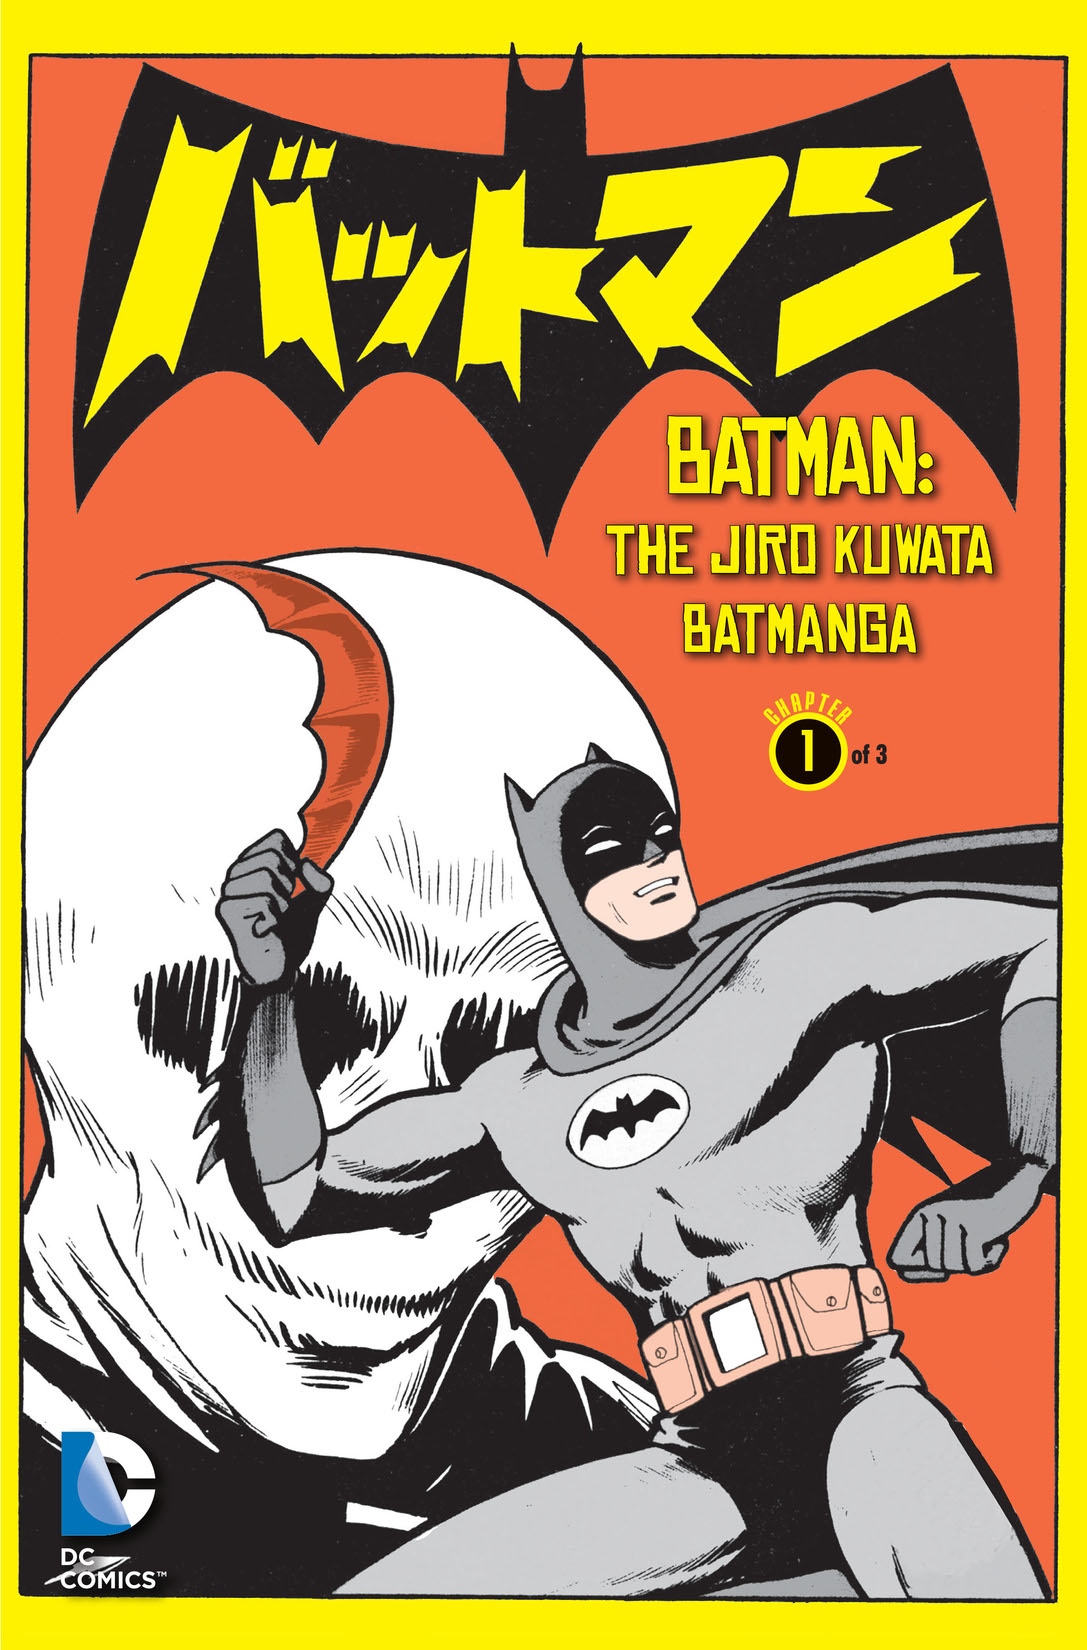 Batman: The Jiro Kuwata Batmanga #1 preview images